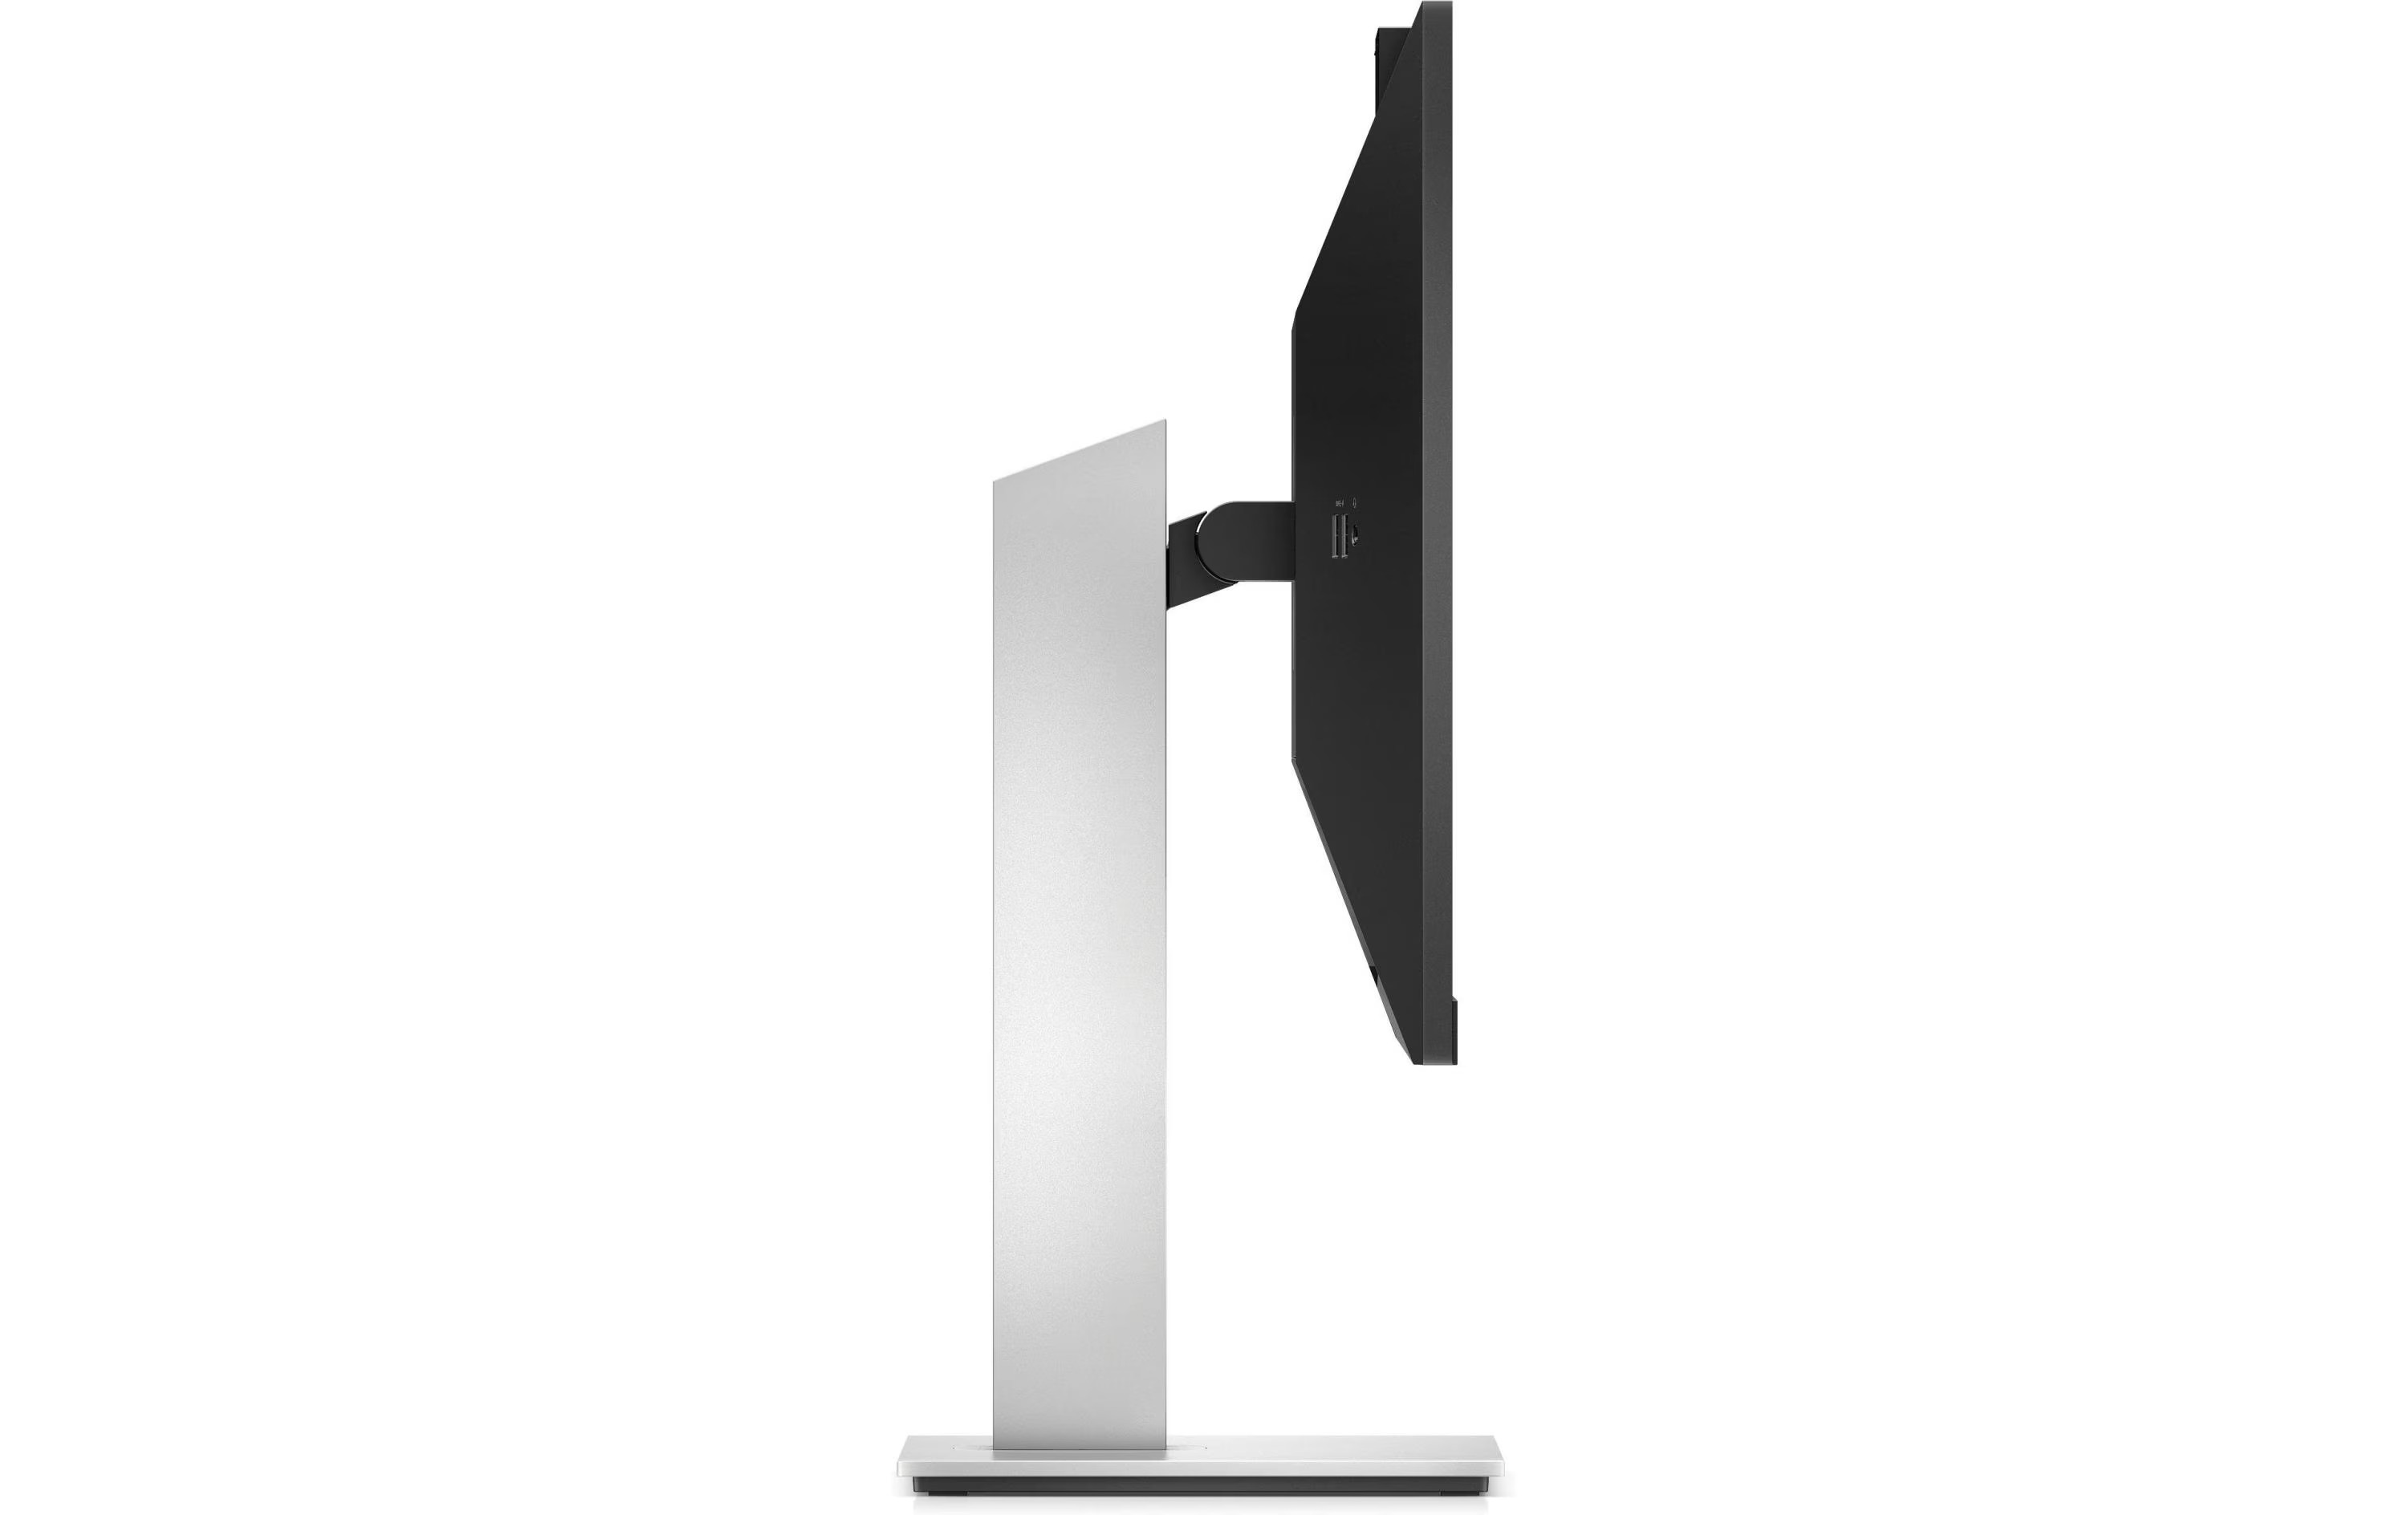 24" Display HP E24d G4 mit USB-C PD + Webcam (CH-Modell)